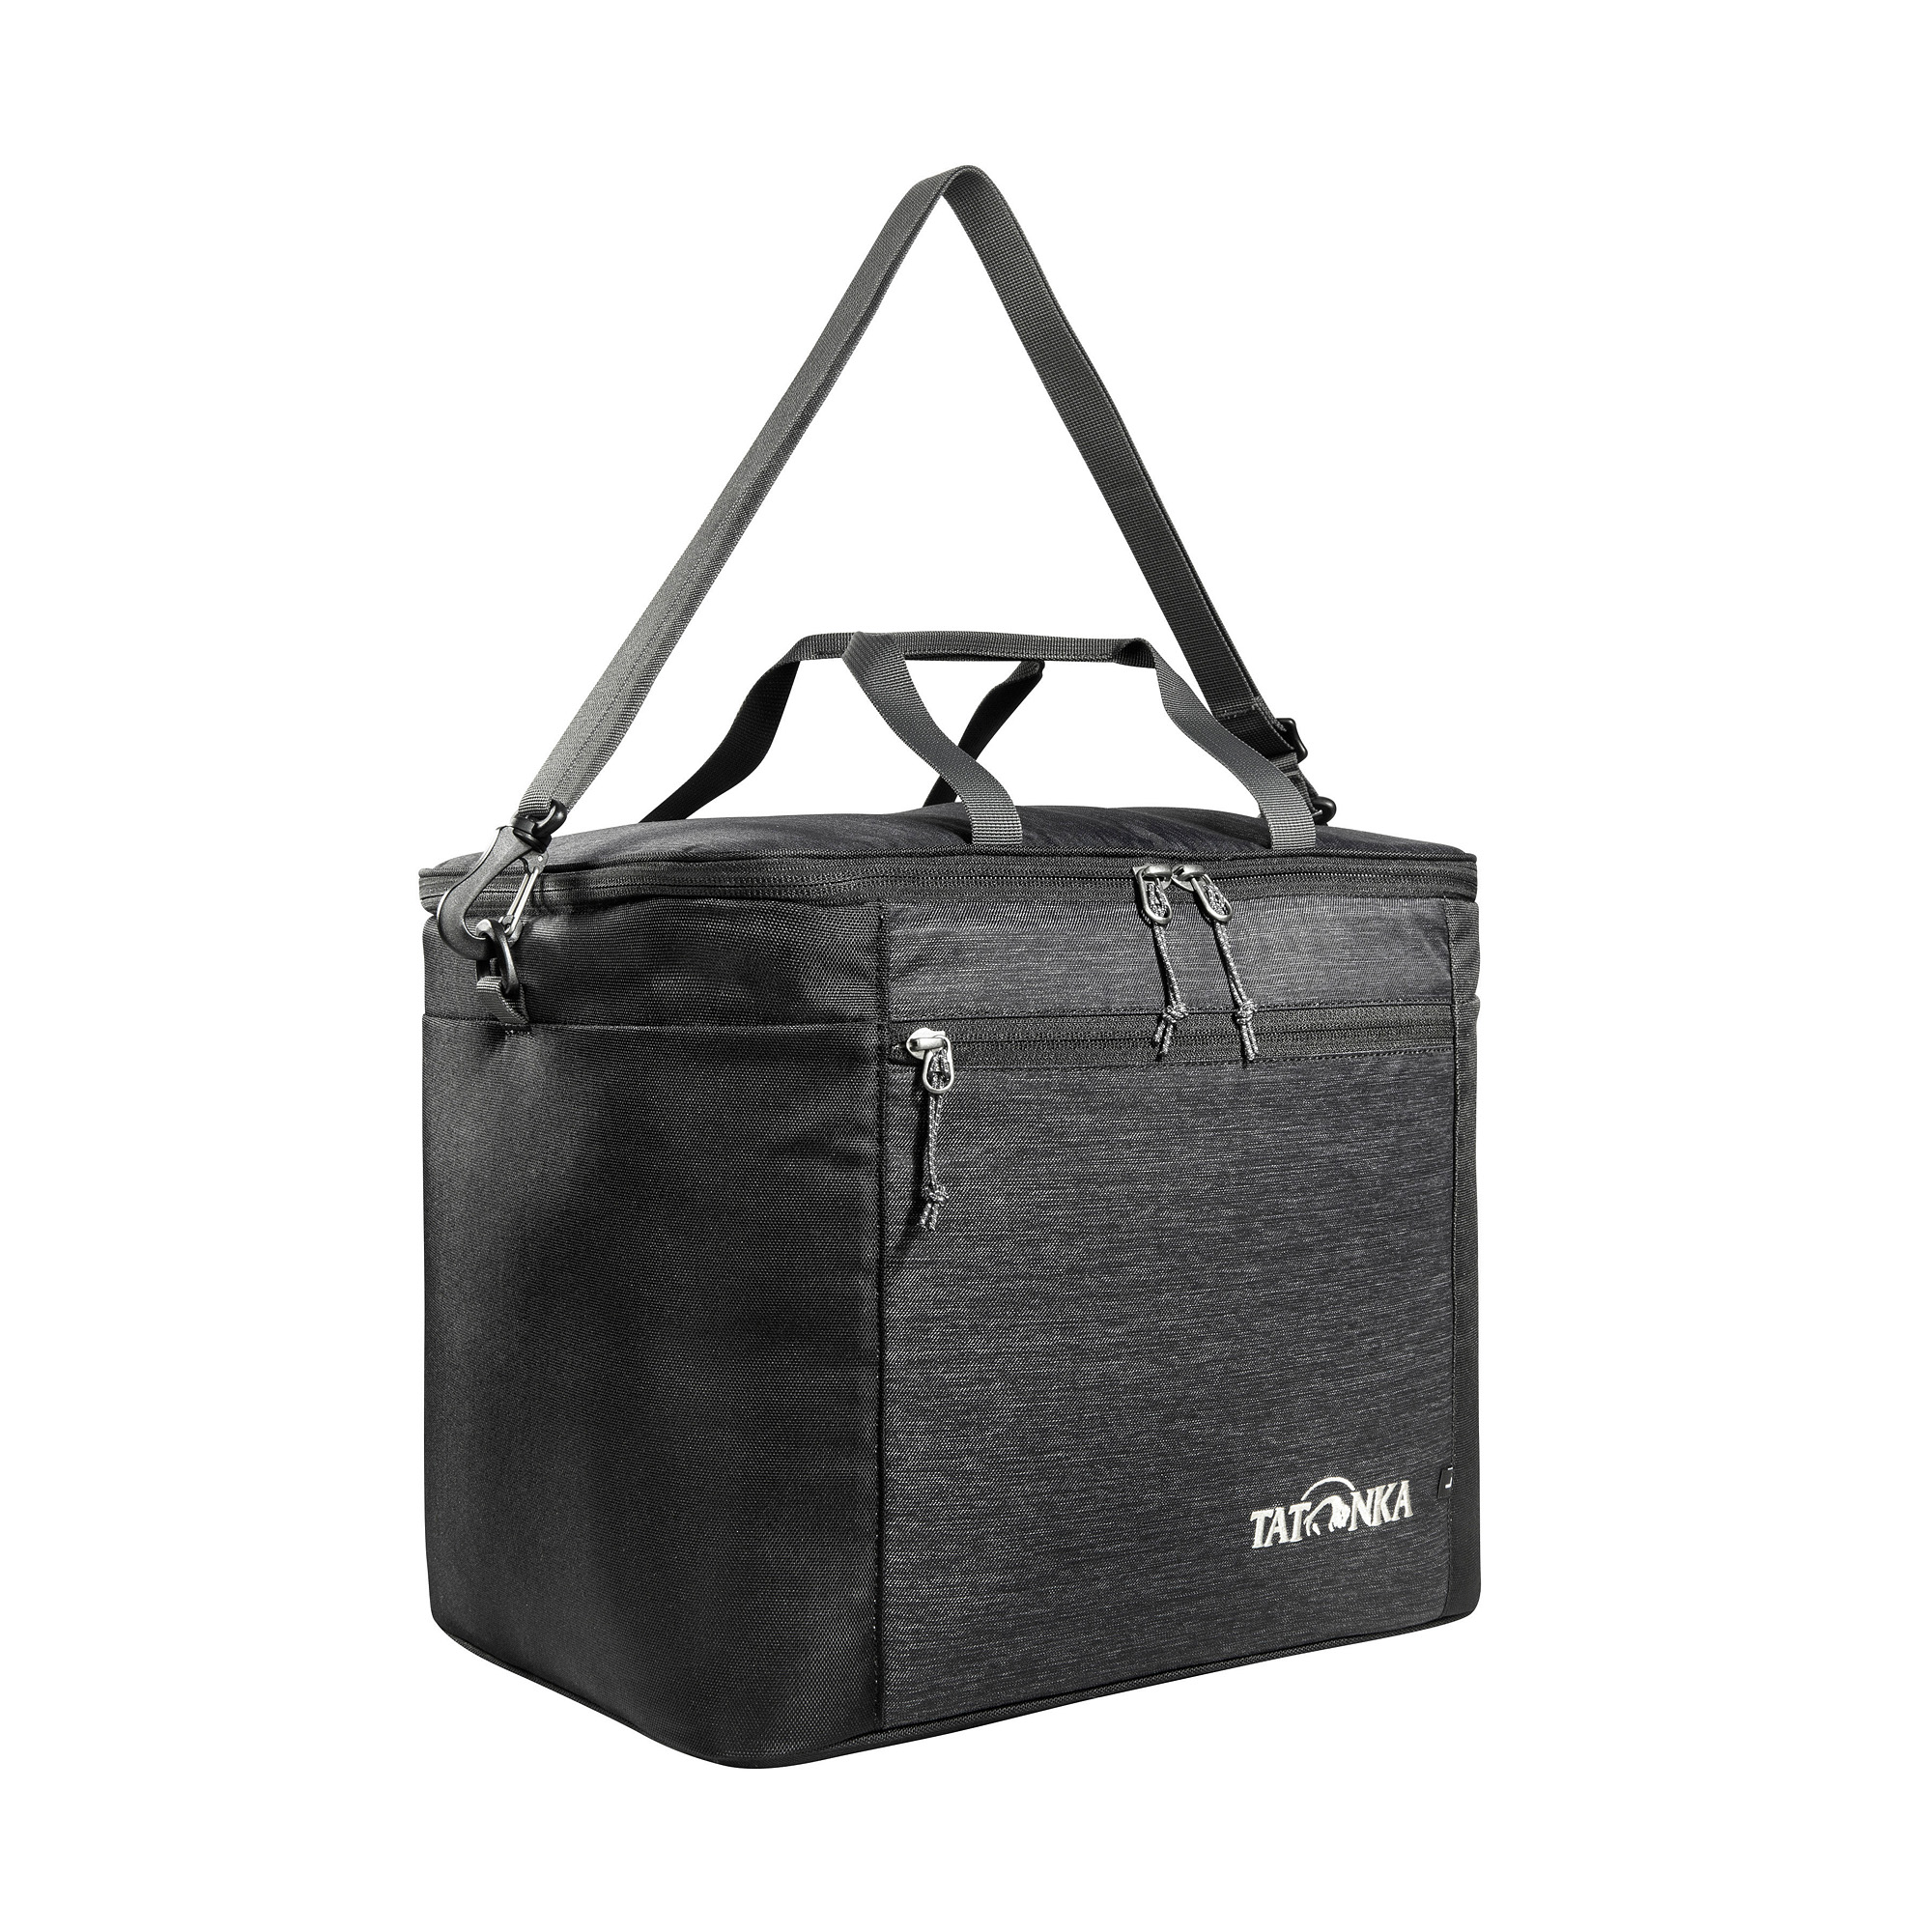 Tatonka Cooler Bag L off black schwarz Sonstige Taschen 4013236336351